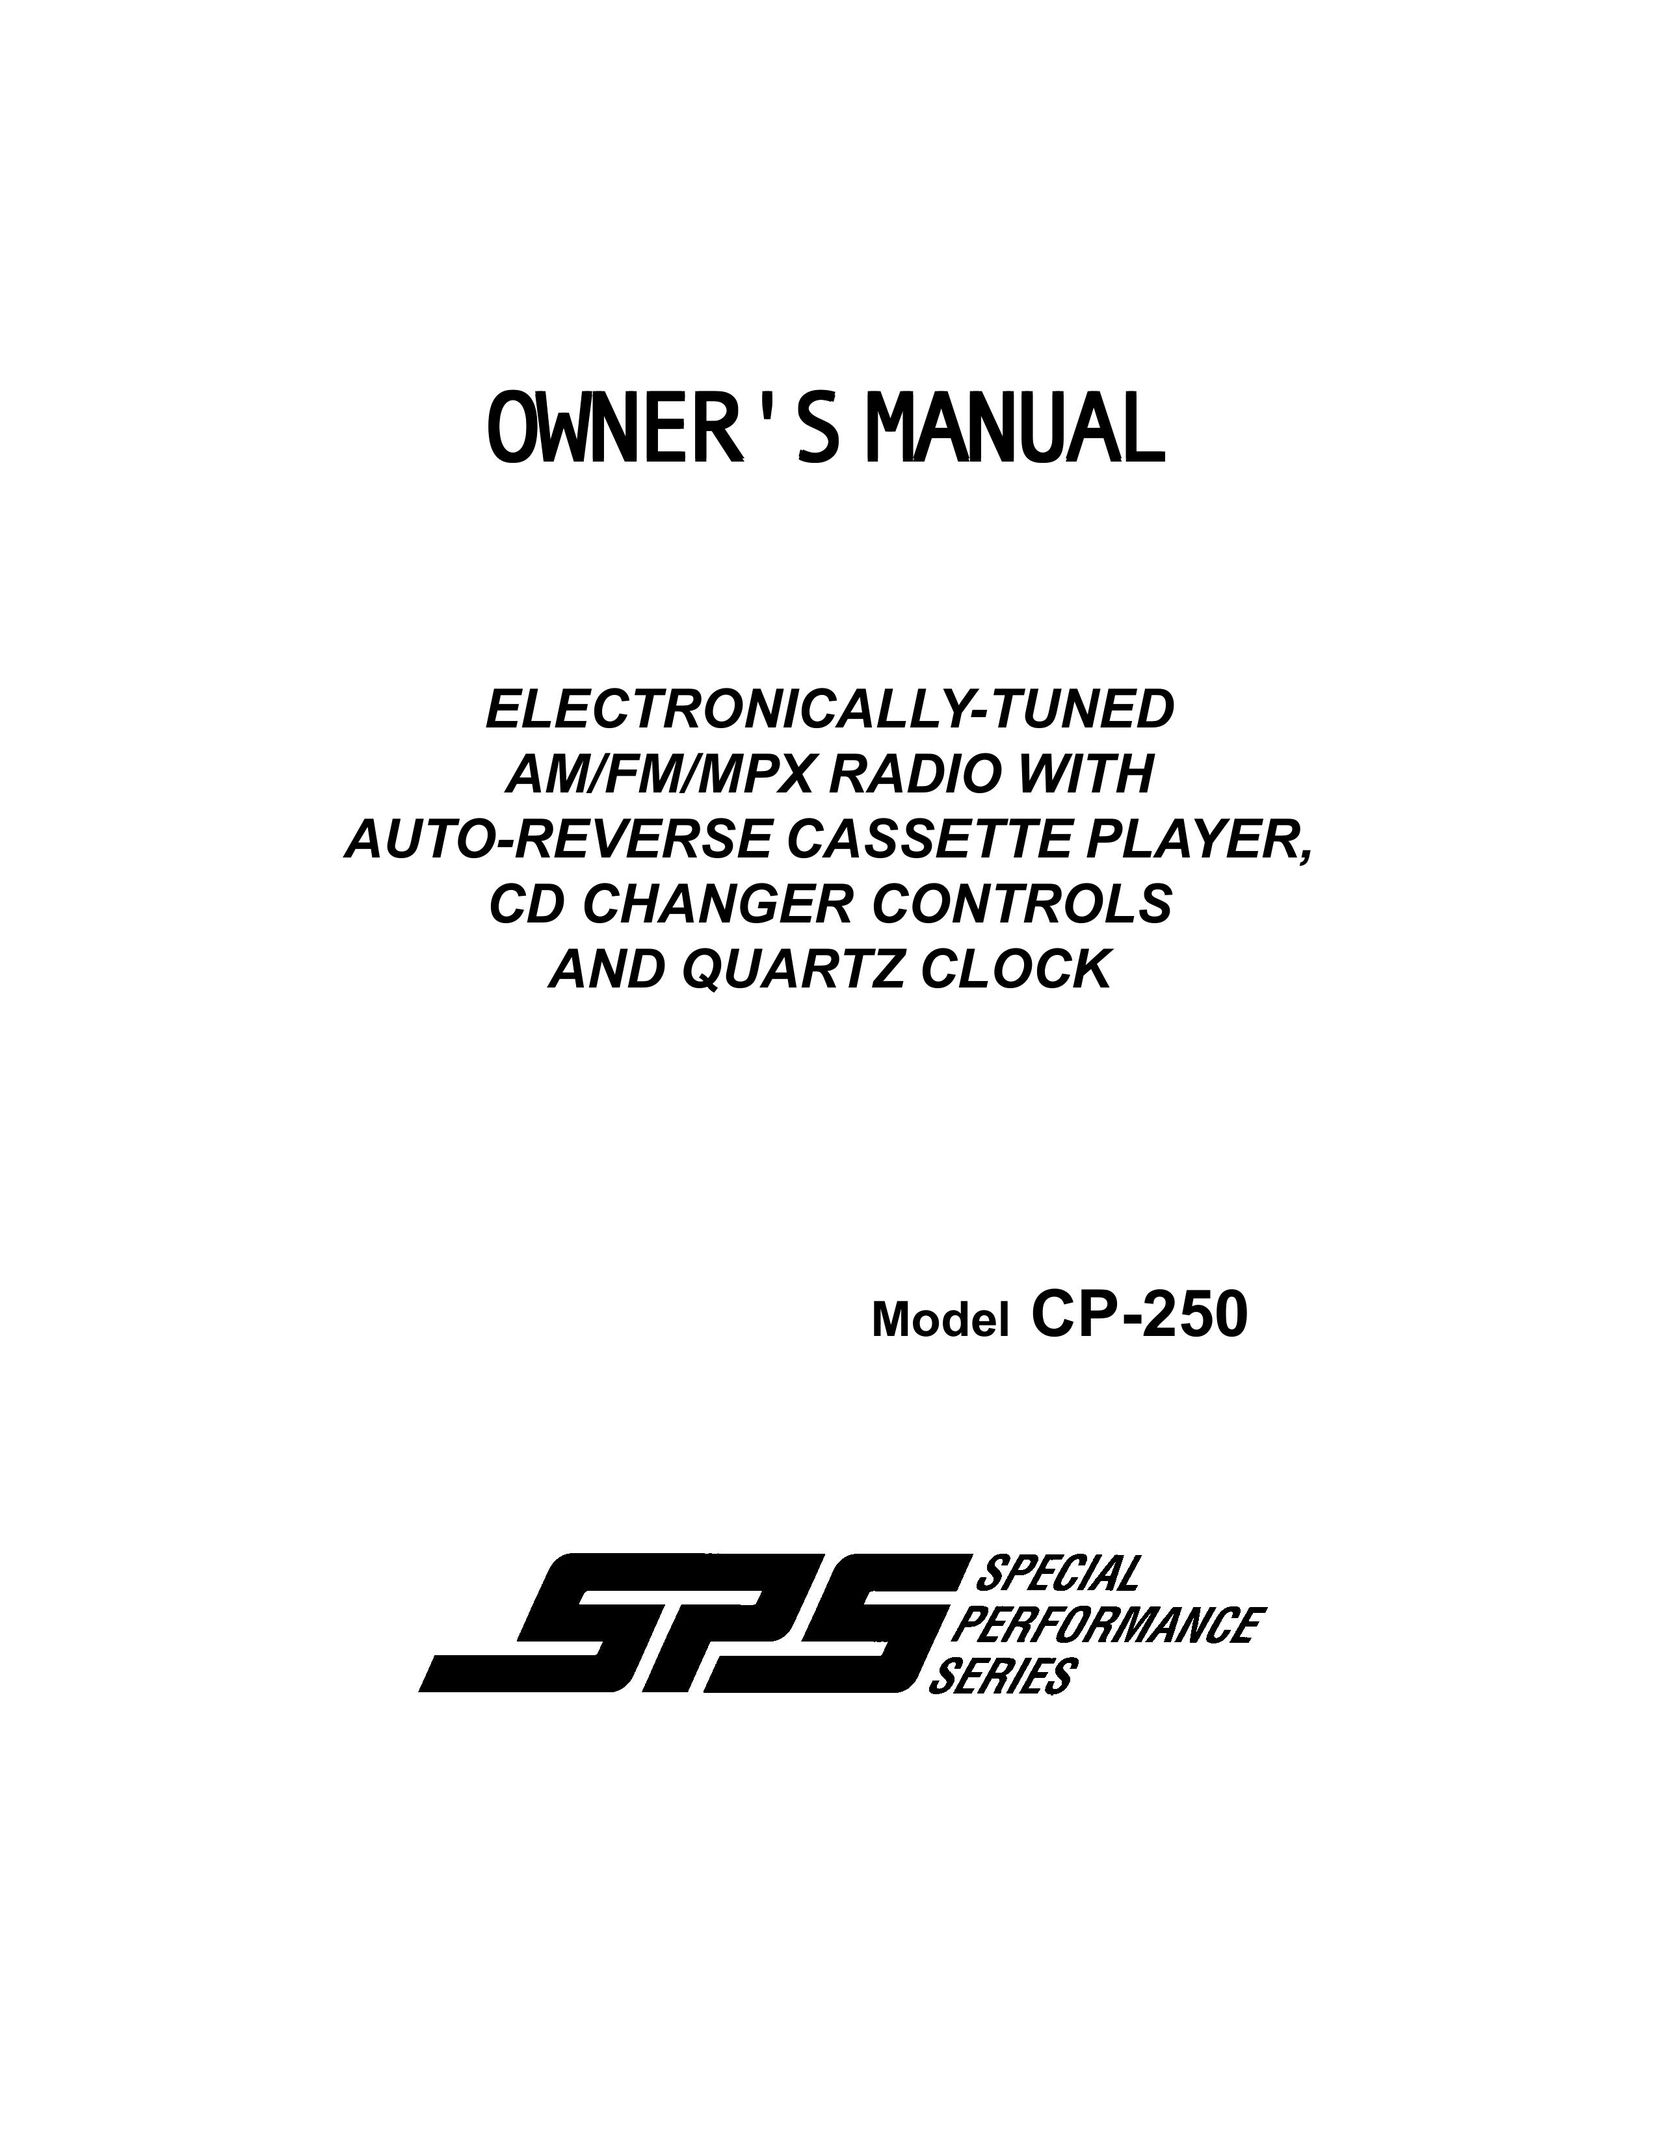 Audiovox CE250 Two-Way Radio User Manual